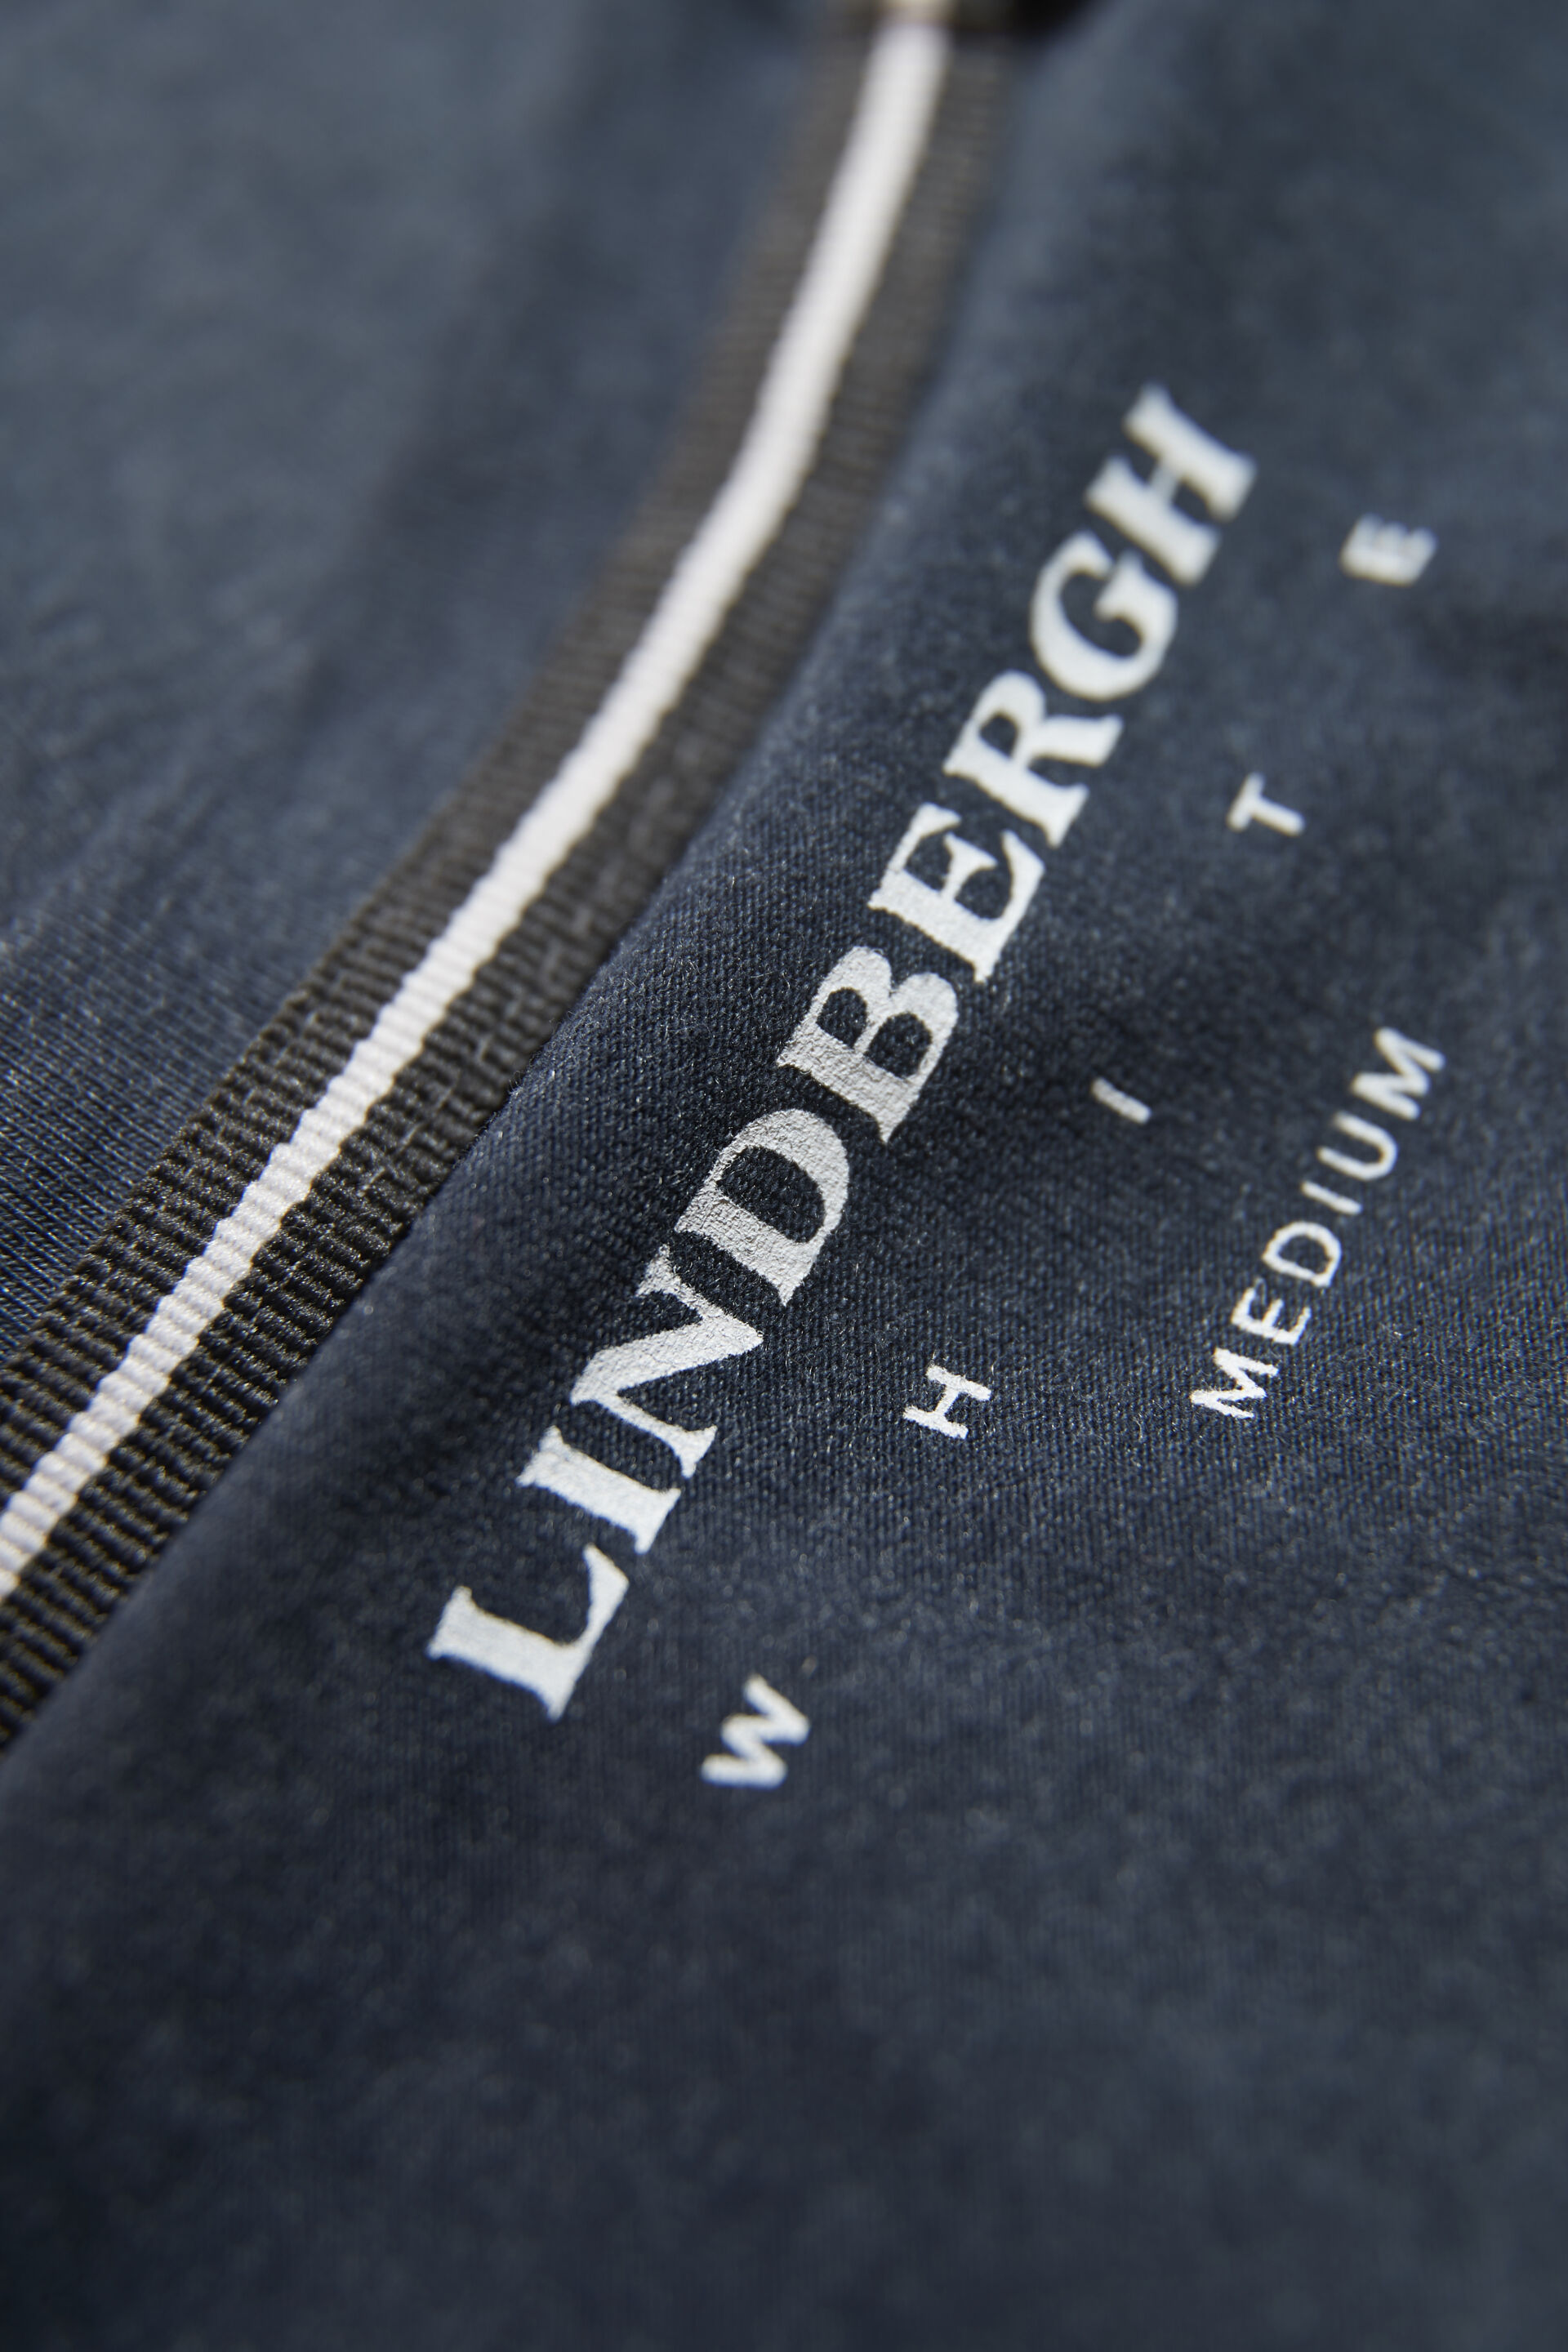 Lindbergh  T-shirt 30-48001